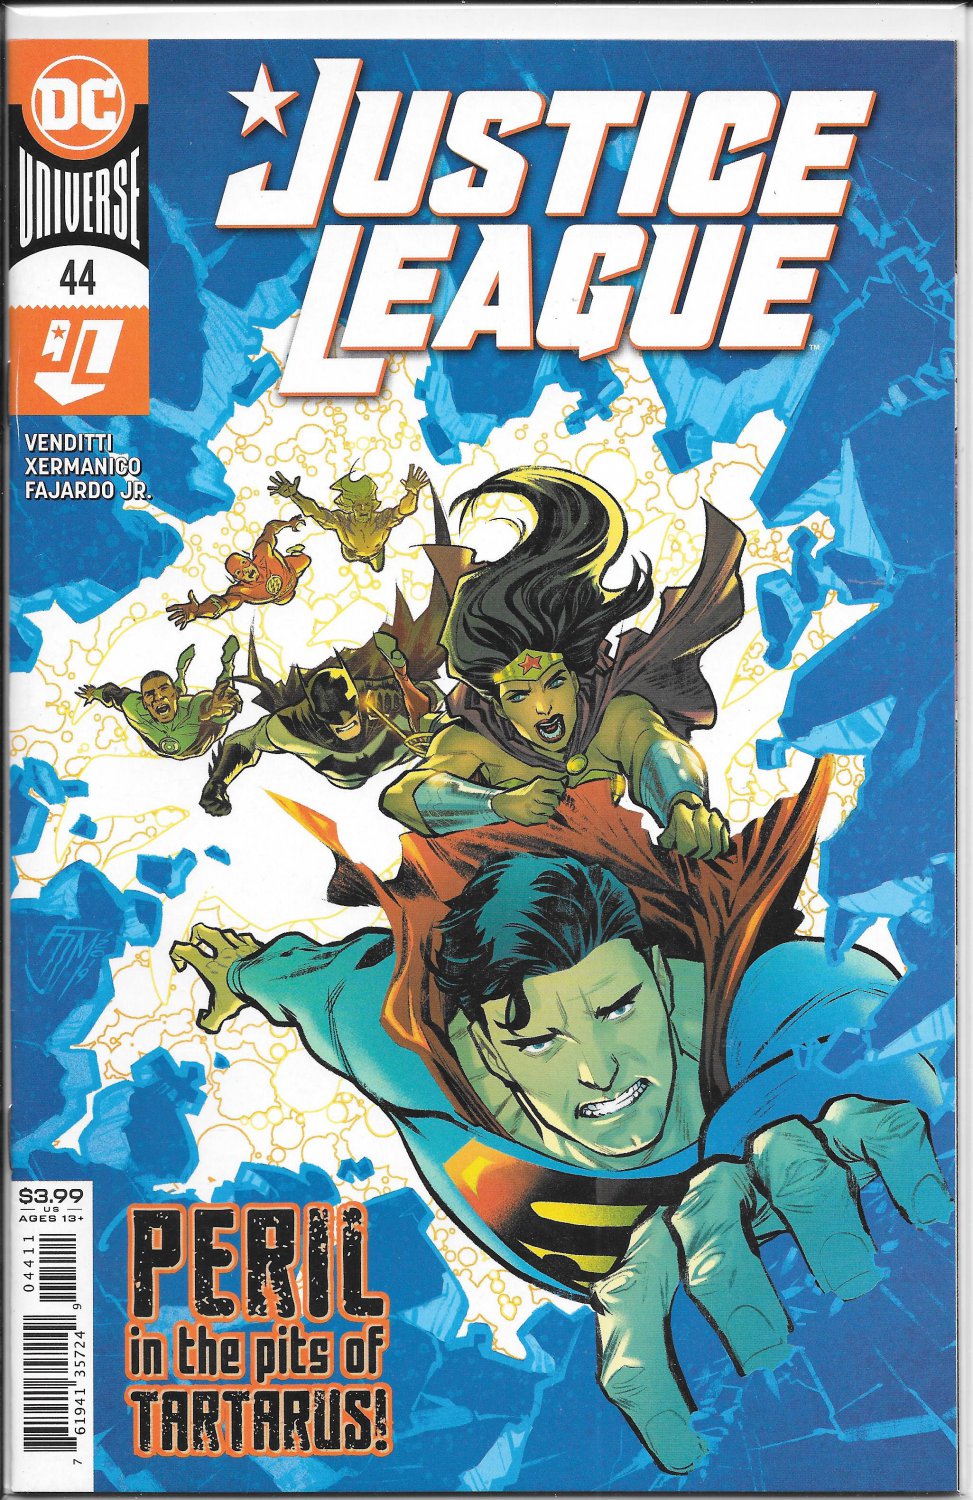 DC COMICS JUSTICE LEAGUE #44